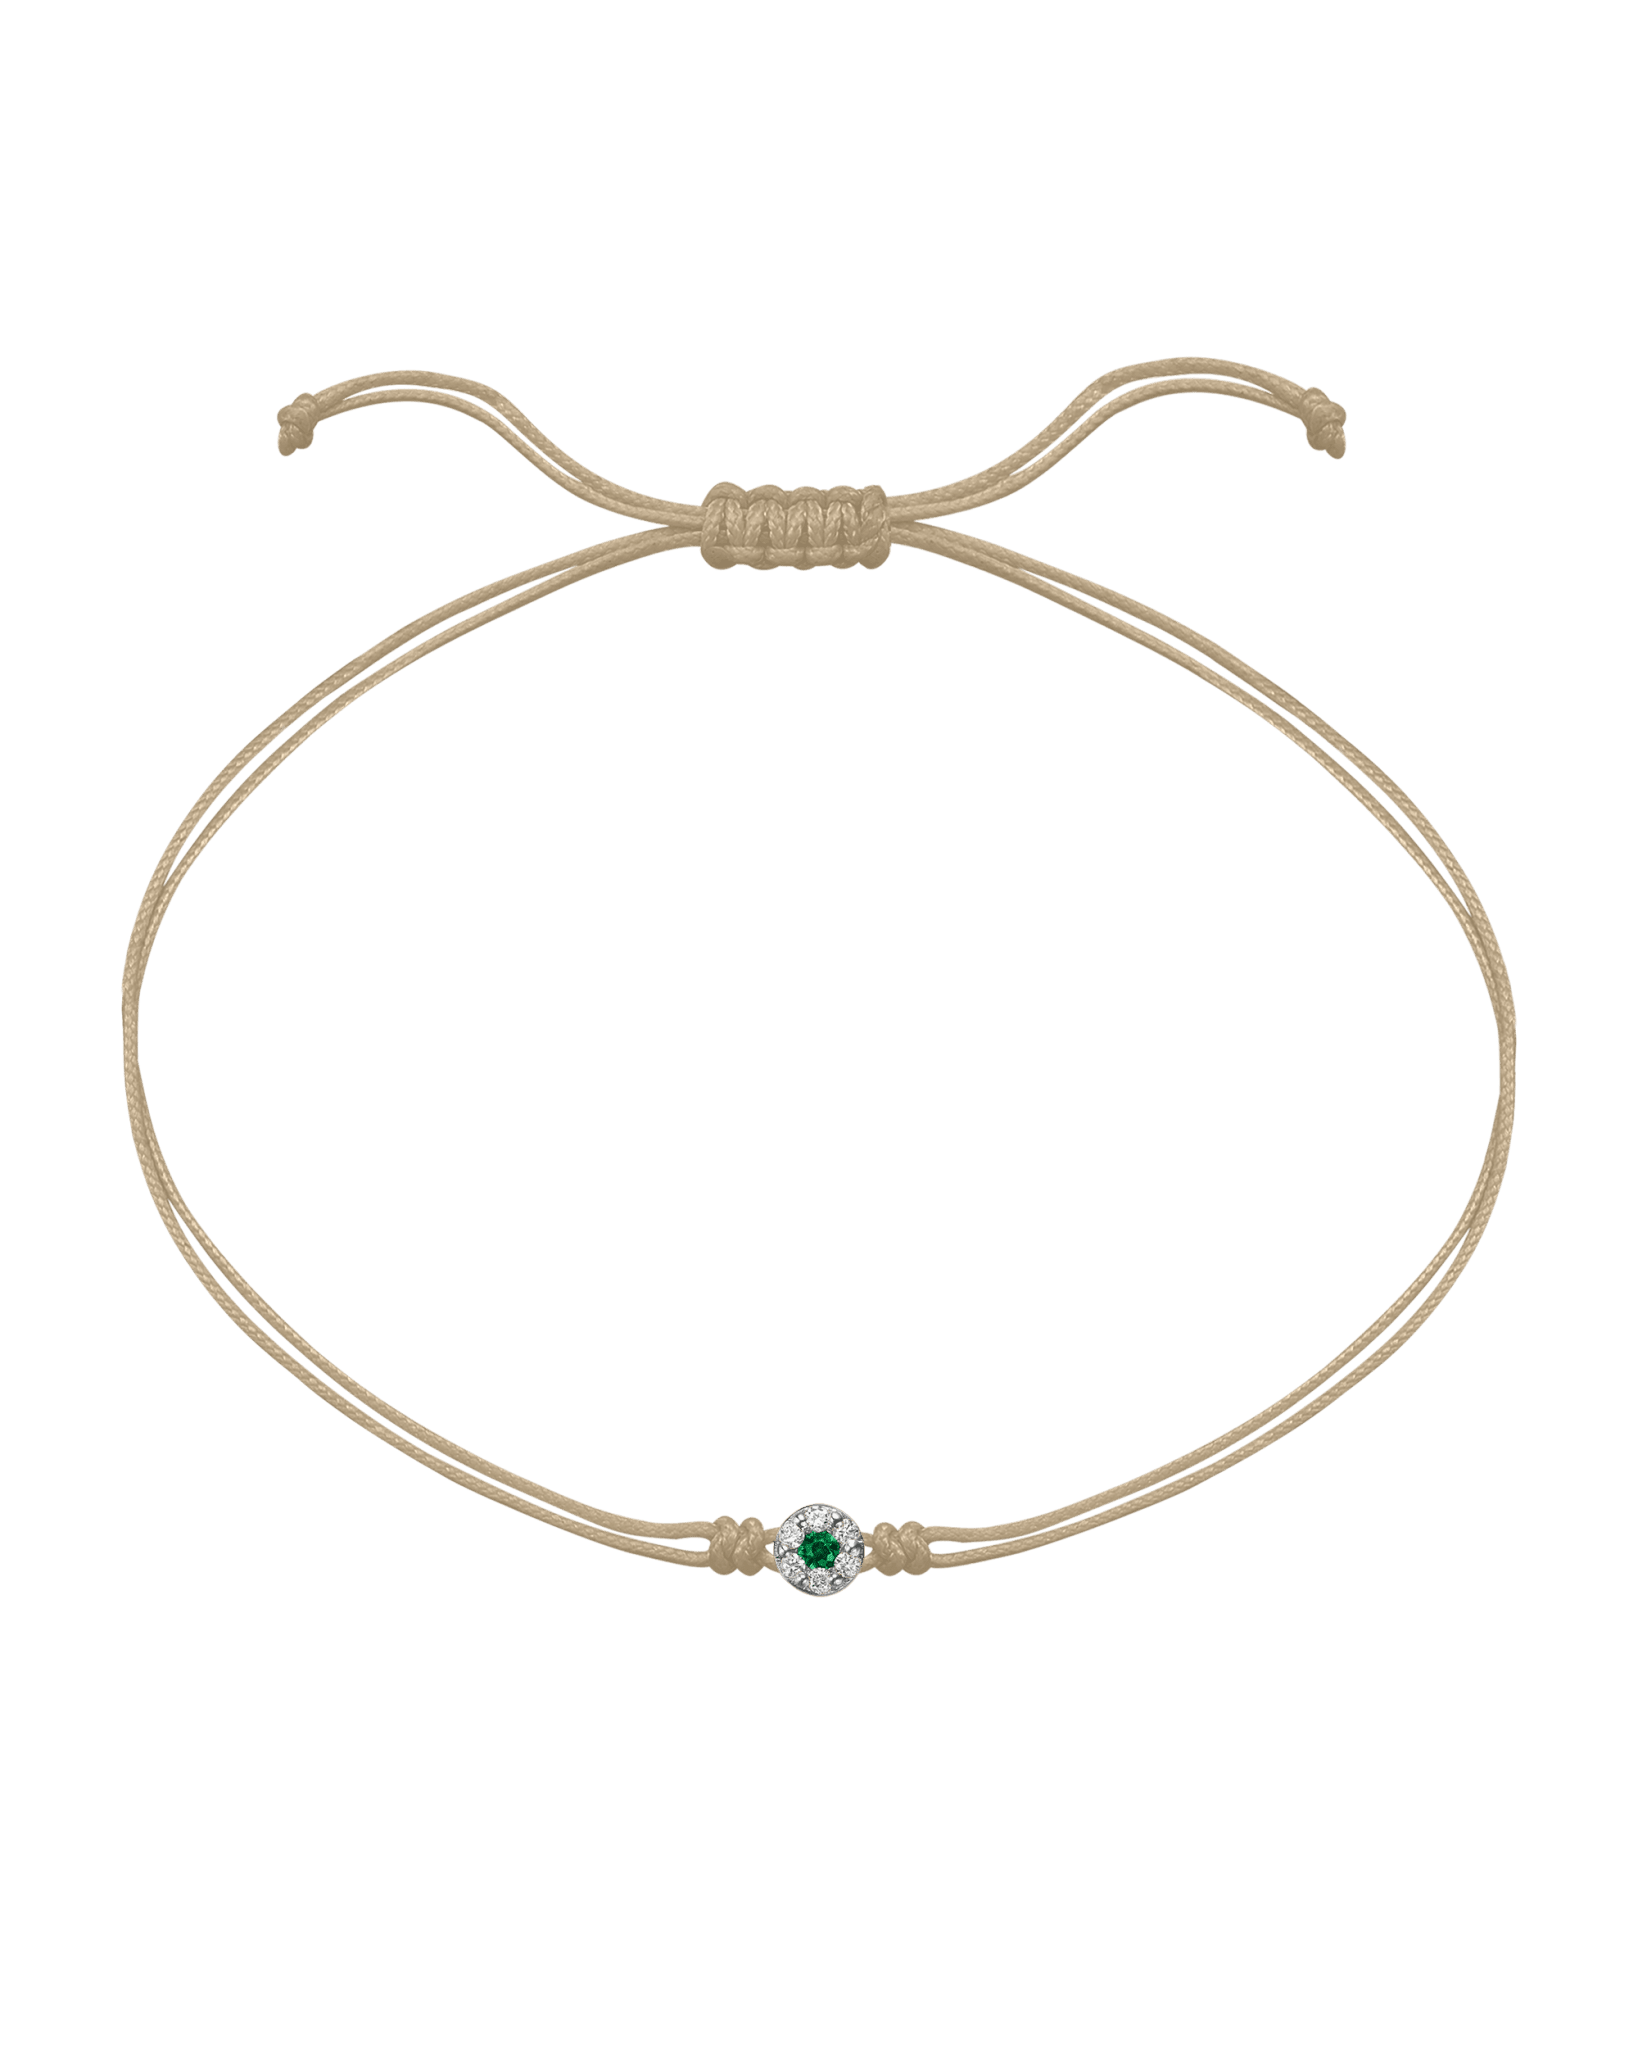 String of Love Diamond and Gemstone - 14K White Gold Bracelet 14K Solid Gold Beige Emerald 